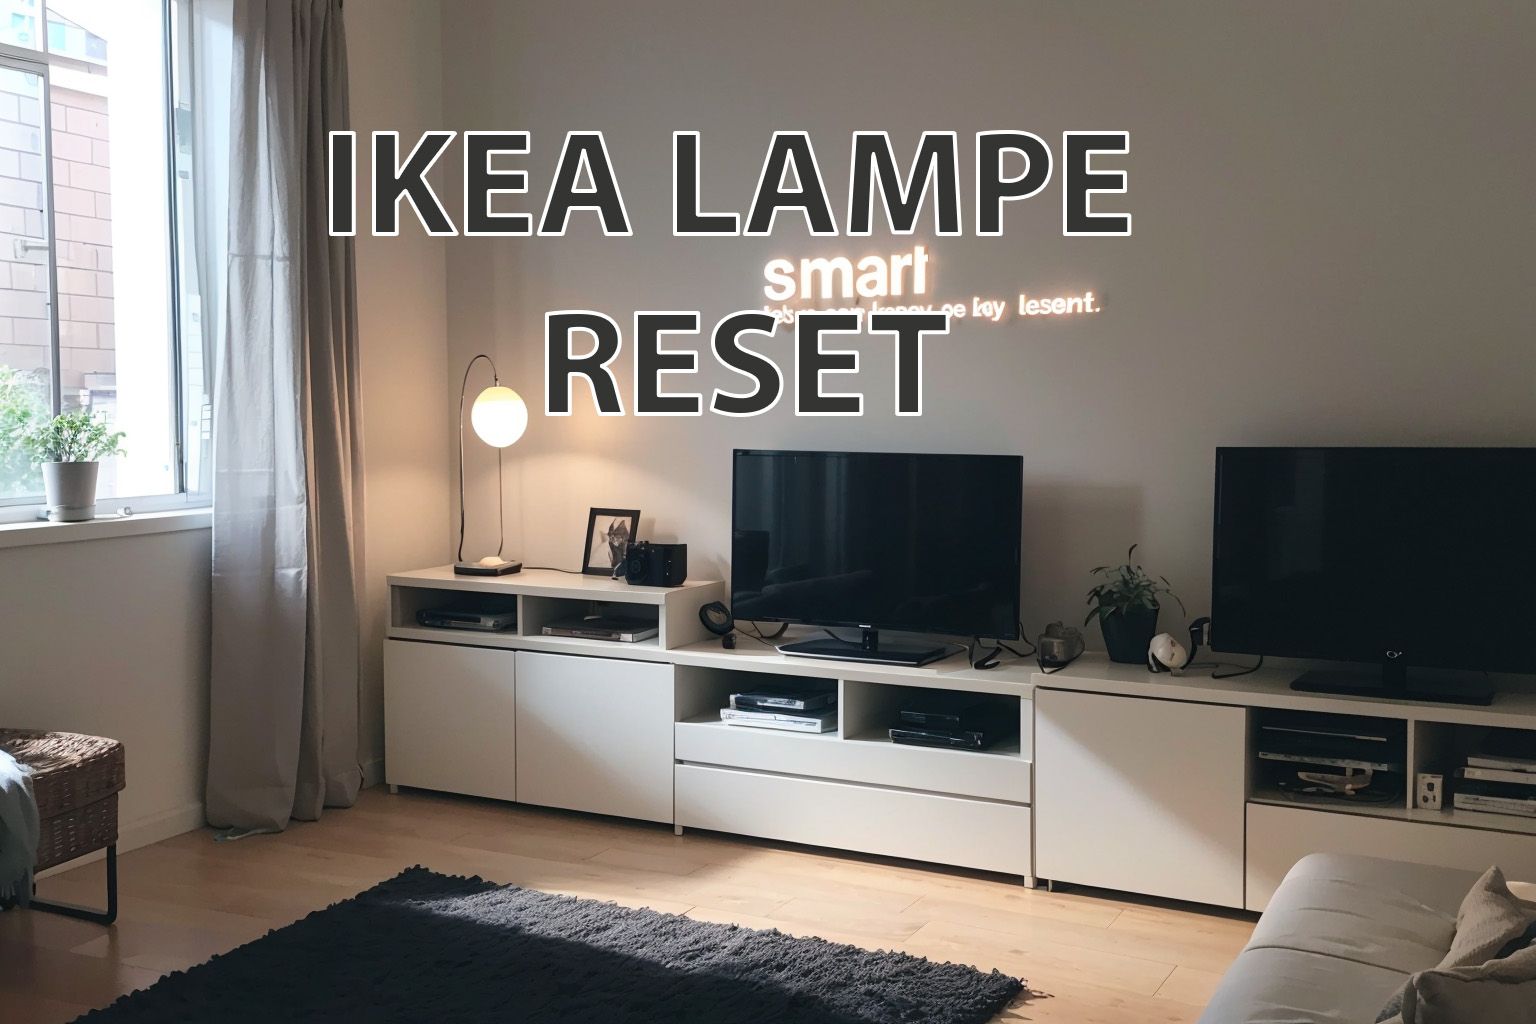 Homeassistant: Reset Ikea TRÅDFRI lamp